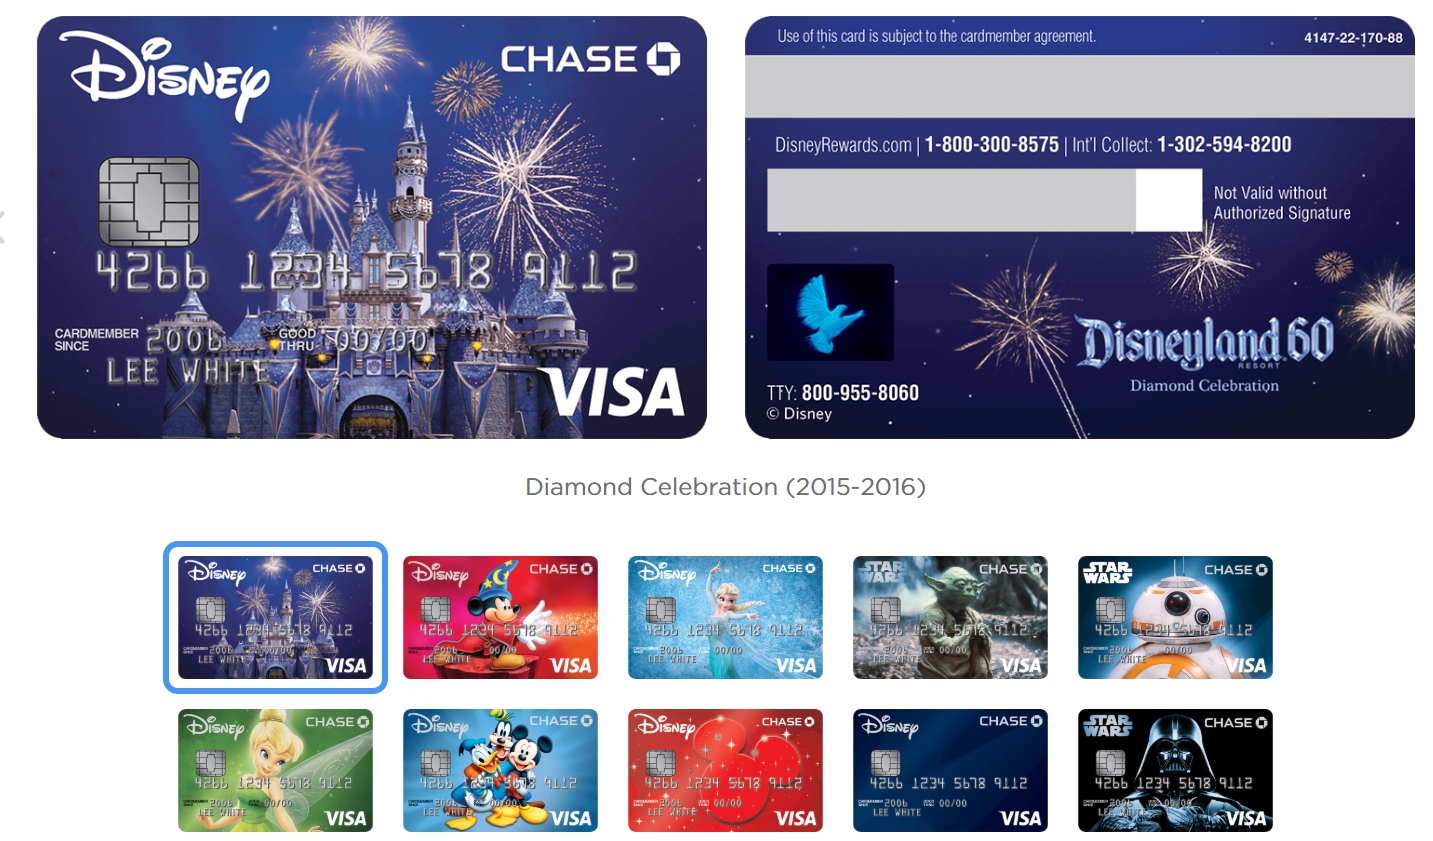 《【4.29 Targeted Upgrade Offer】迪士尼爱好者的神卡——Chase Disney Visa》